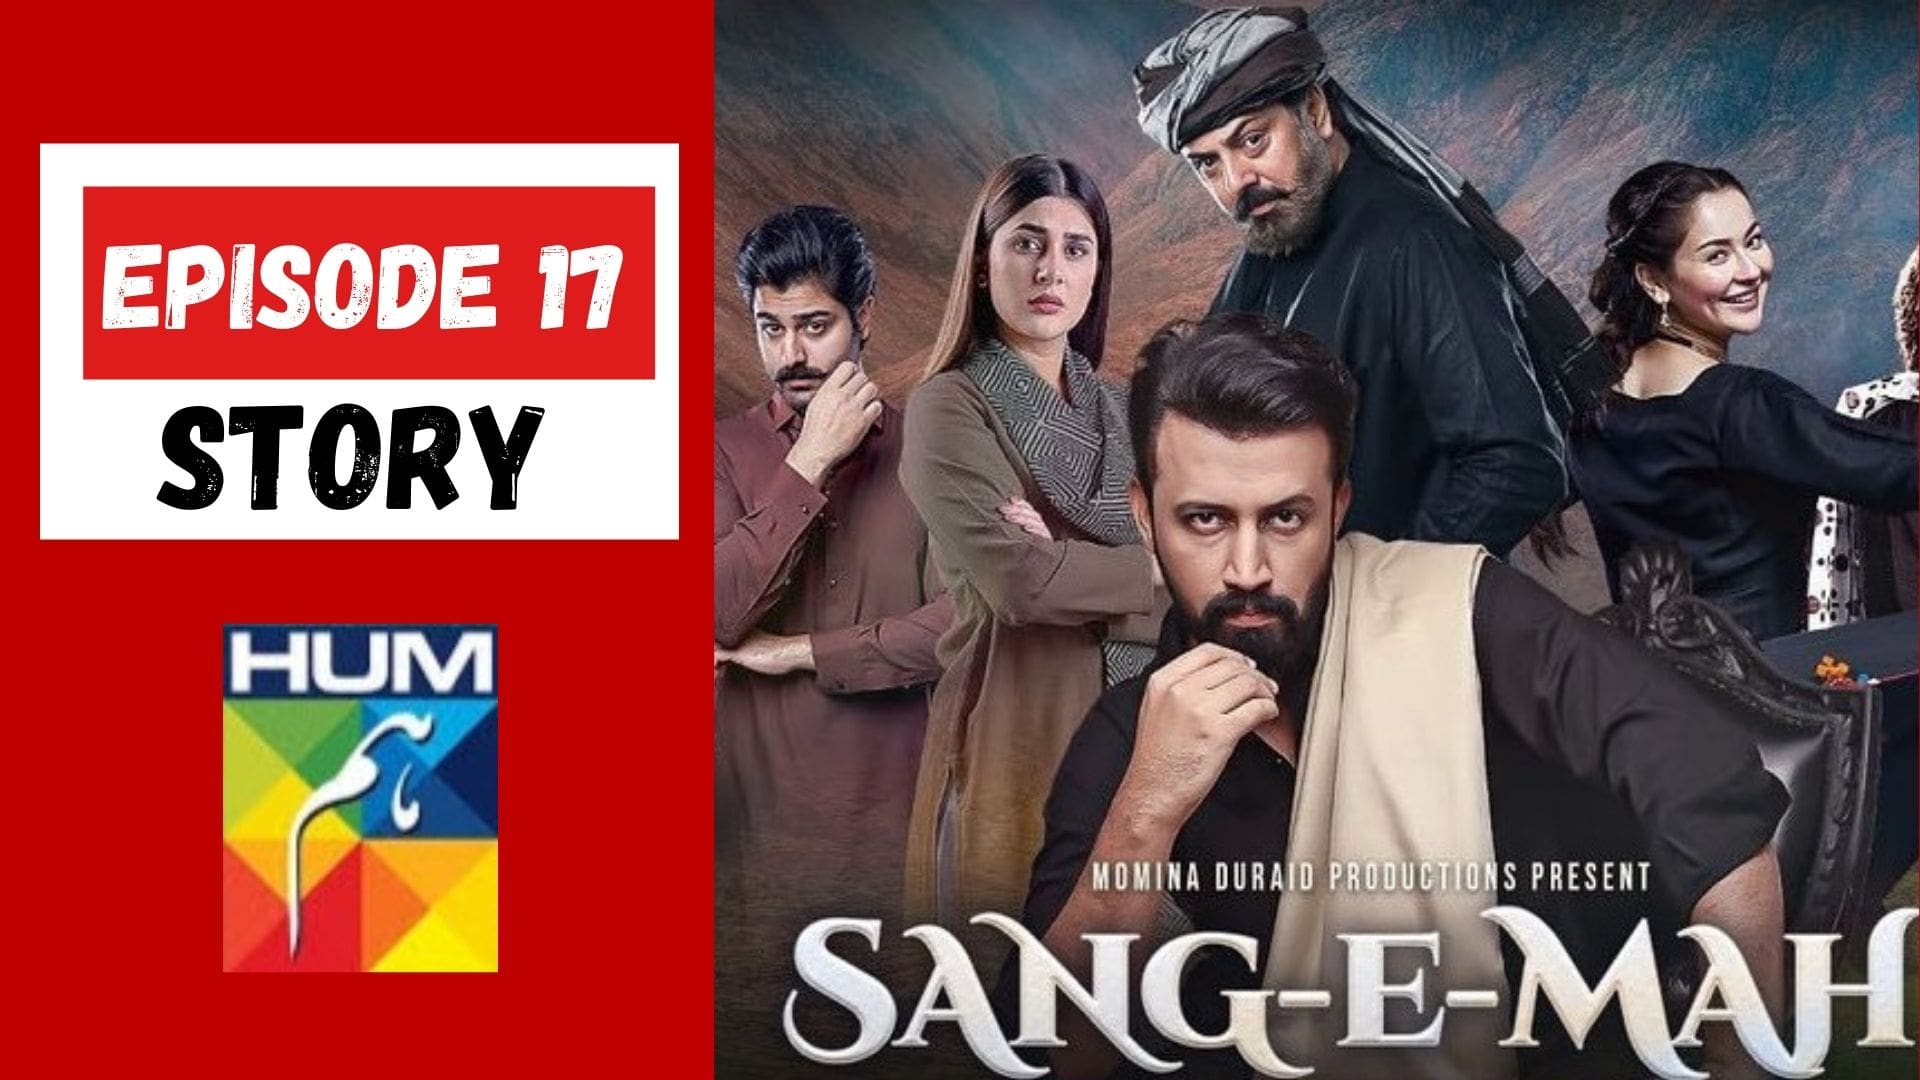 Sang-e-Mah Episode 17 Story